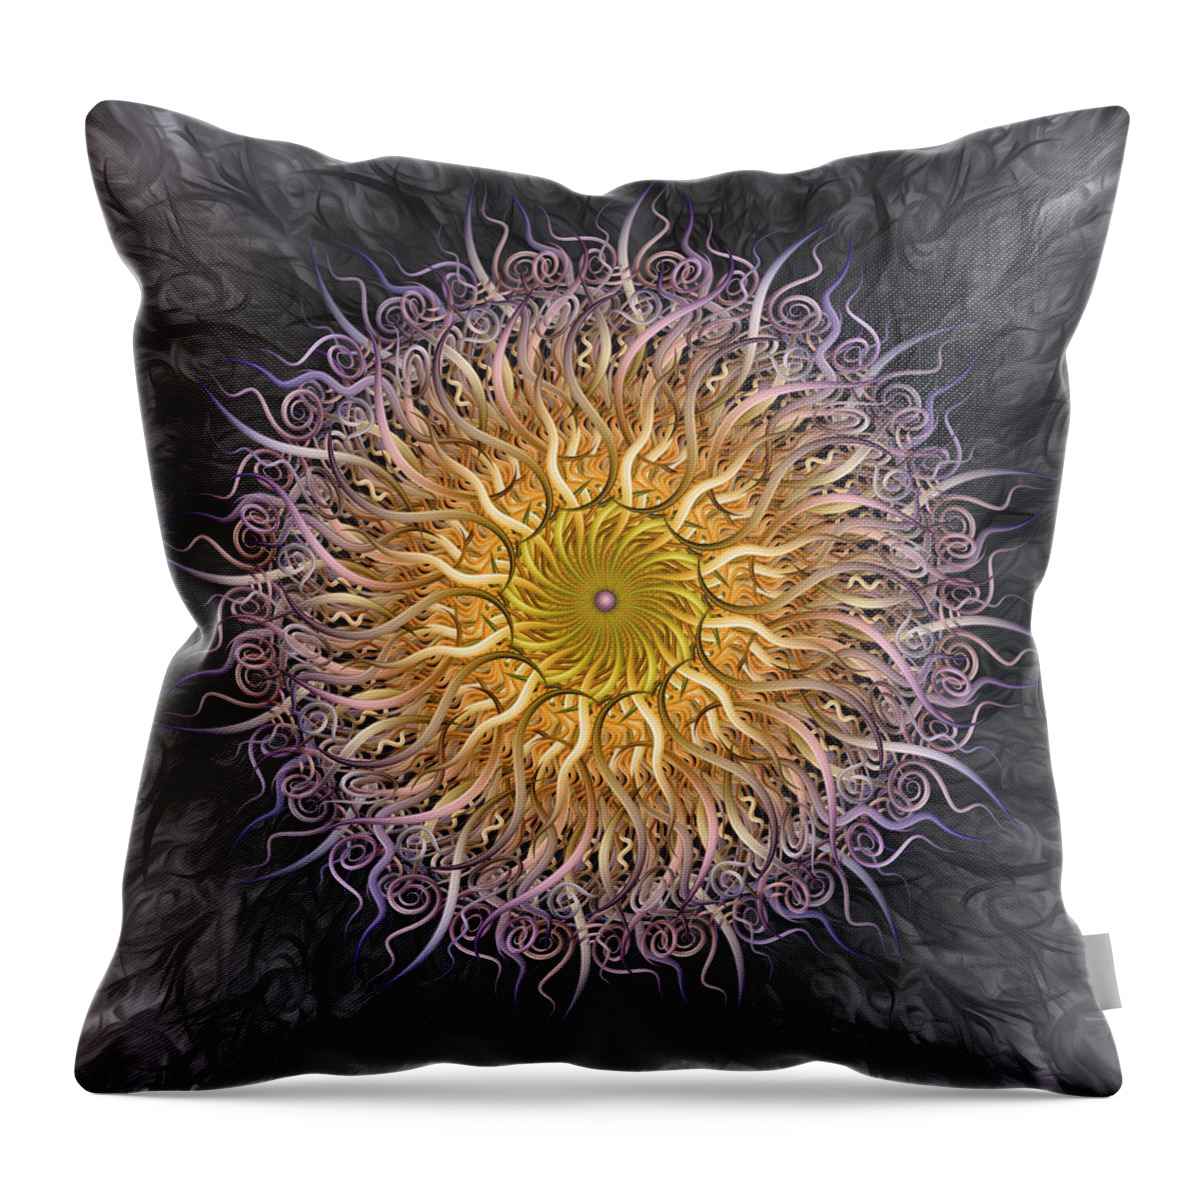 Pinwheel Mandala Throw Pillow featuring the digital art The Lights Of Spiral Serenity by Becky Titus